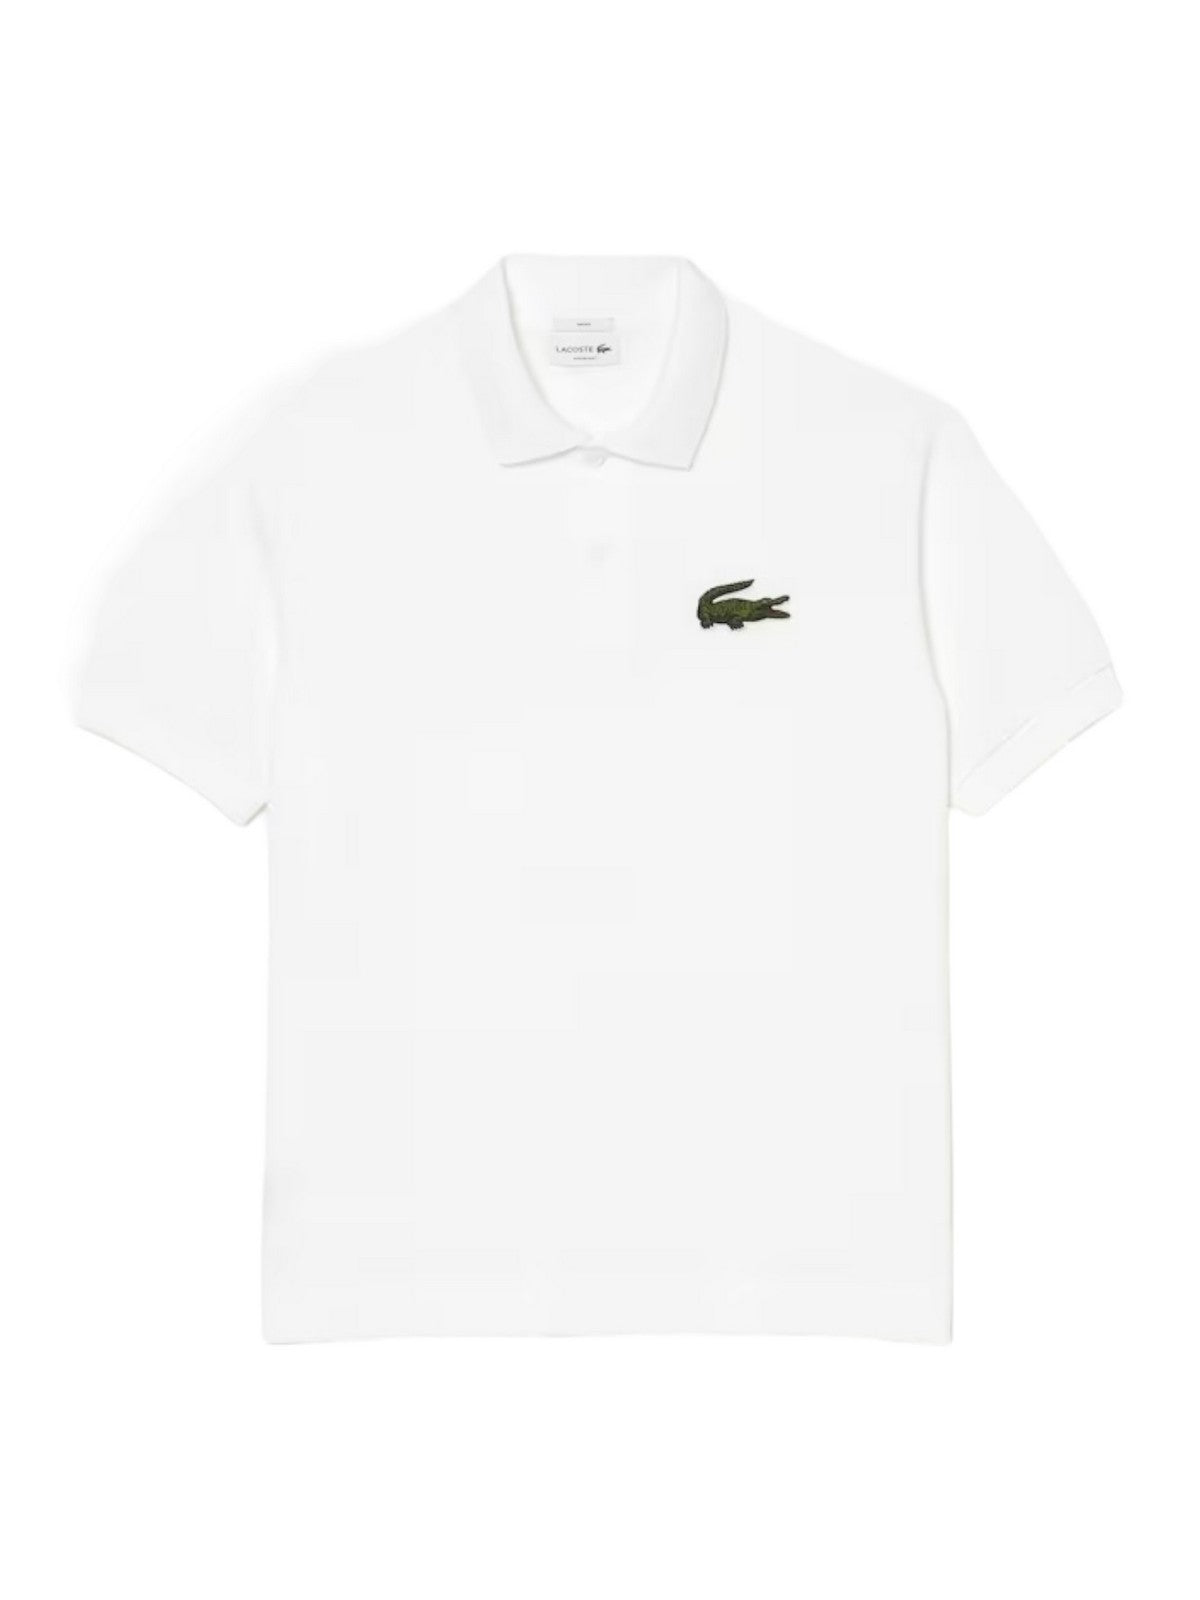 LACOSTE T-Shirt e Polo Uomo  PH3922 001 Bianco